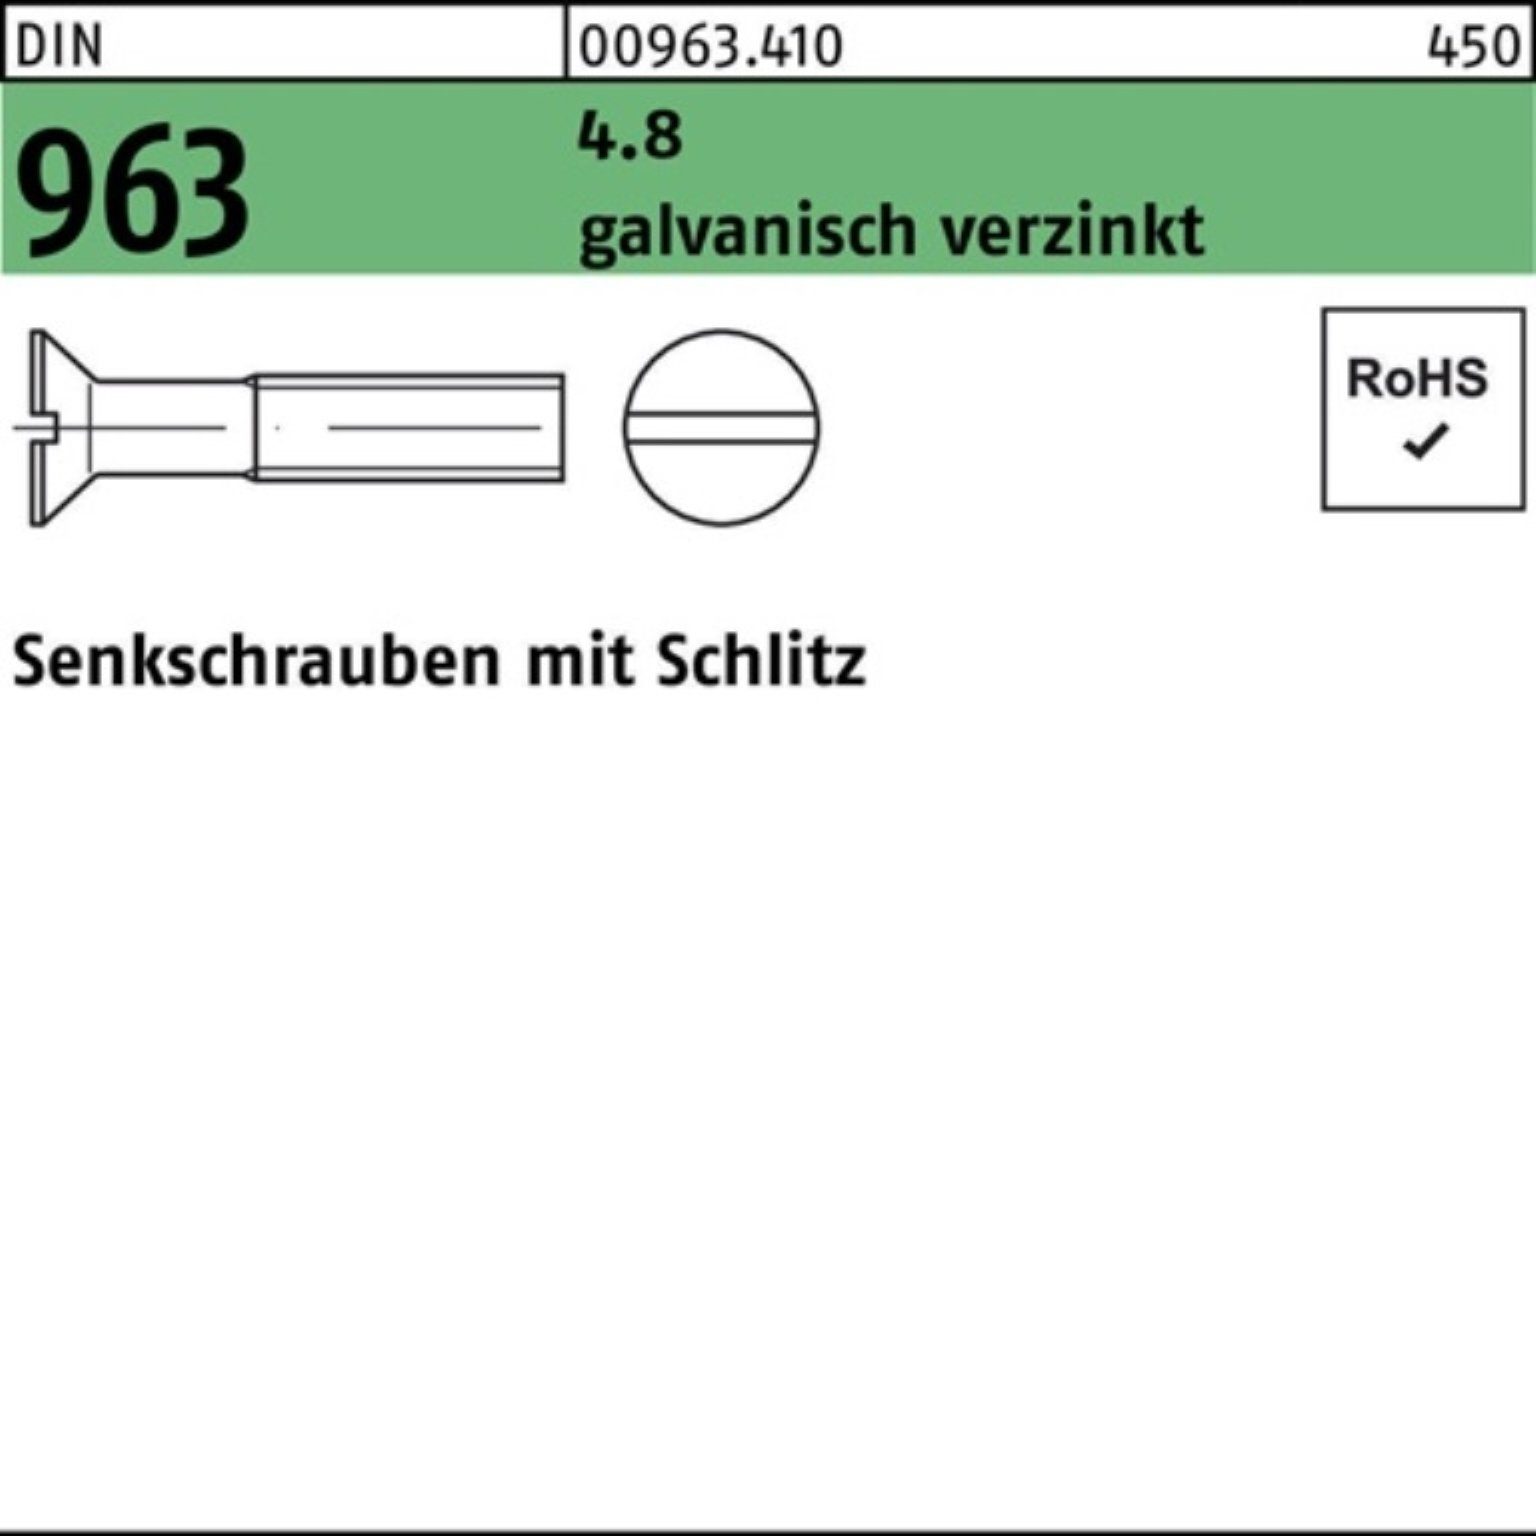 Pack Stü 200er galv.verz. 200 Senkschraube Schlitz M6x Reyher 4.8 DIN Senkschraube 45 963